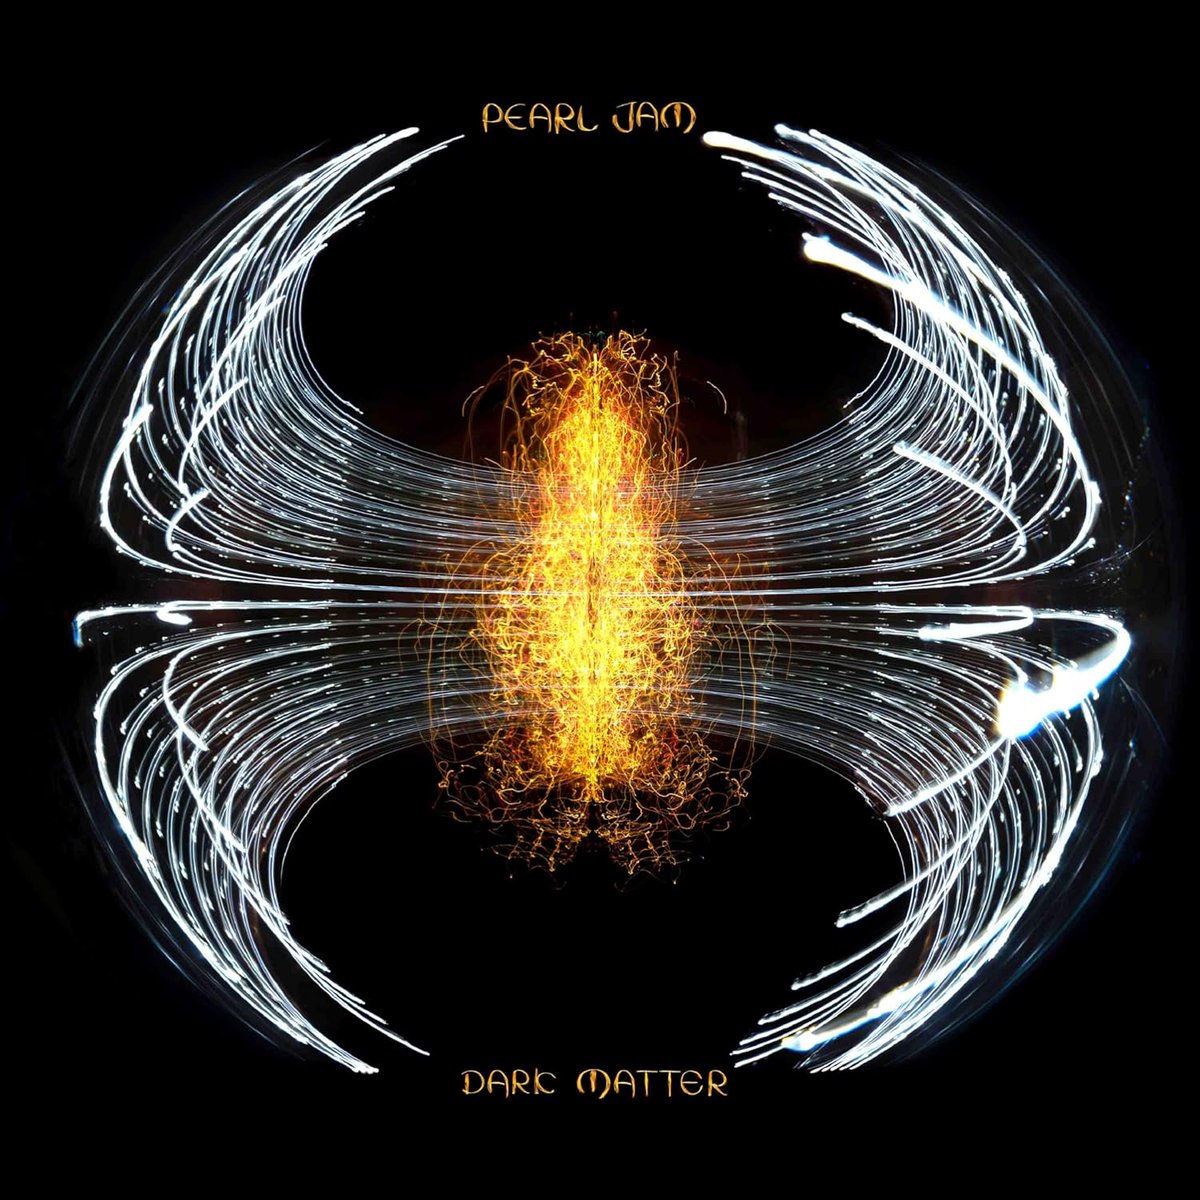 #NowPlaying Dark Matter by Pearl Jam #RecordOfTheDay #ROTD #AlbumOfTheDay #AOTD #1522 #PearlJam #NewRelease #NewAlbum #AlternativeRock #USA 🇺🇸
@pearljam